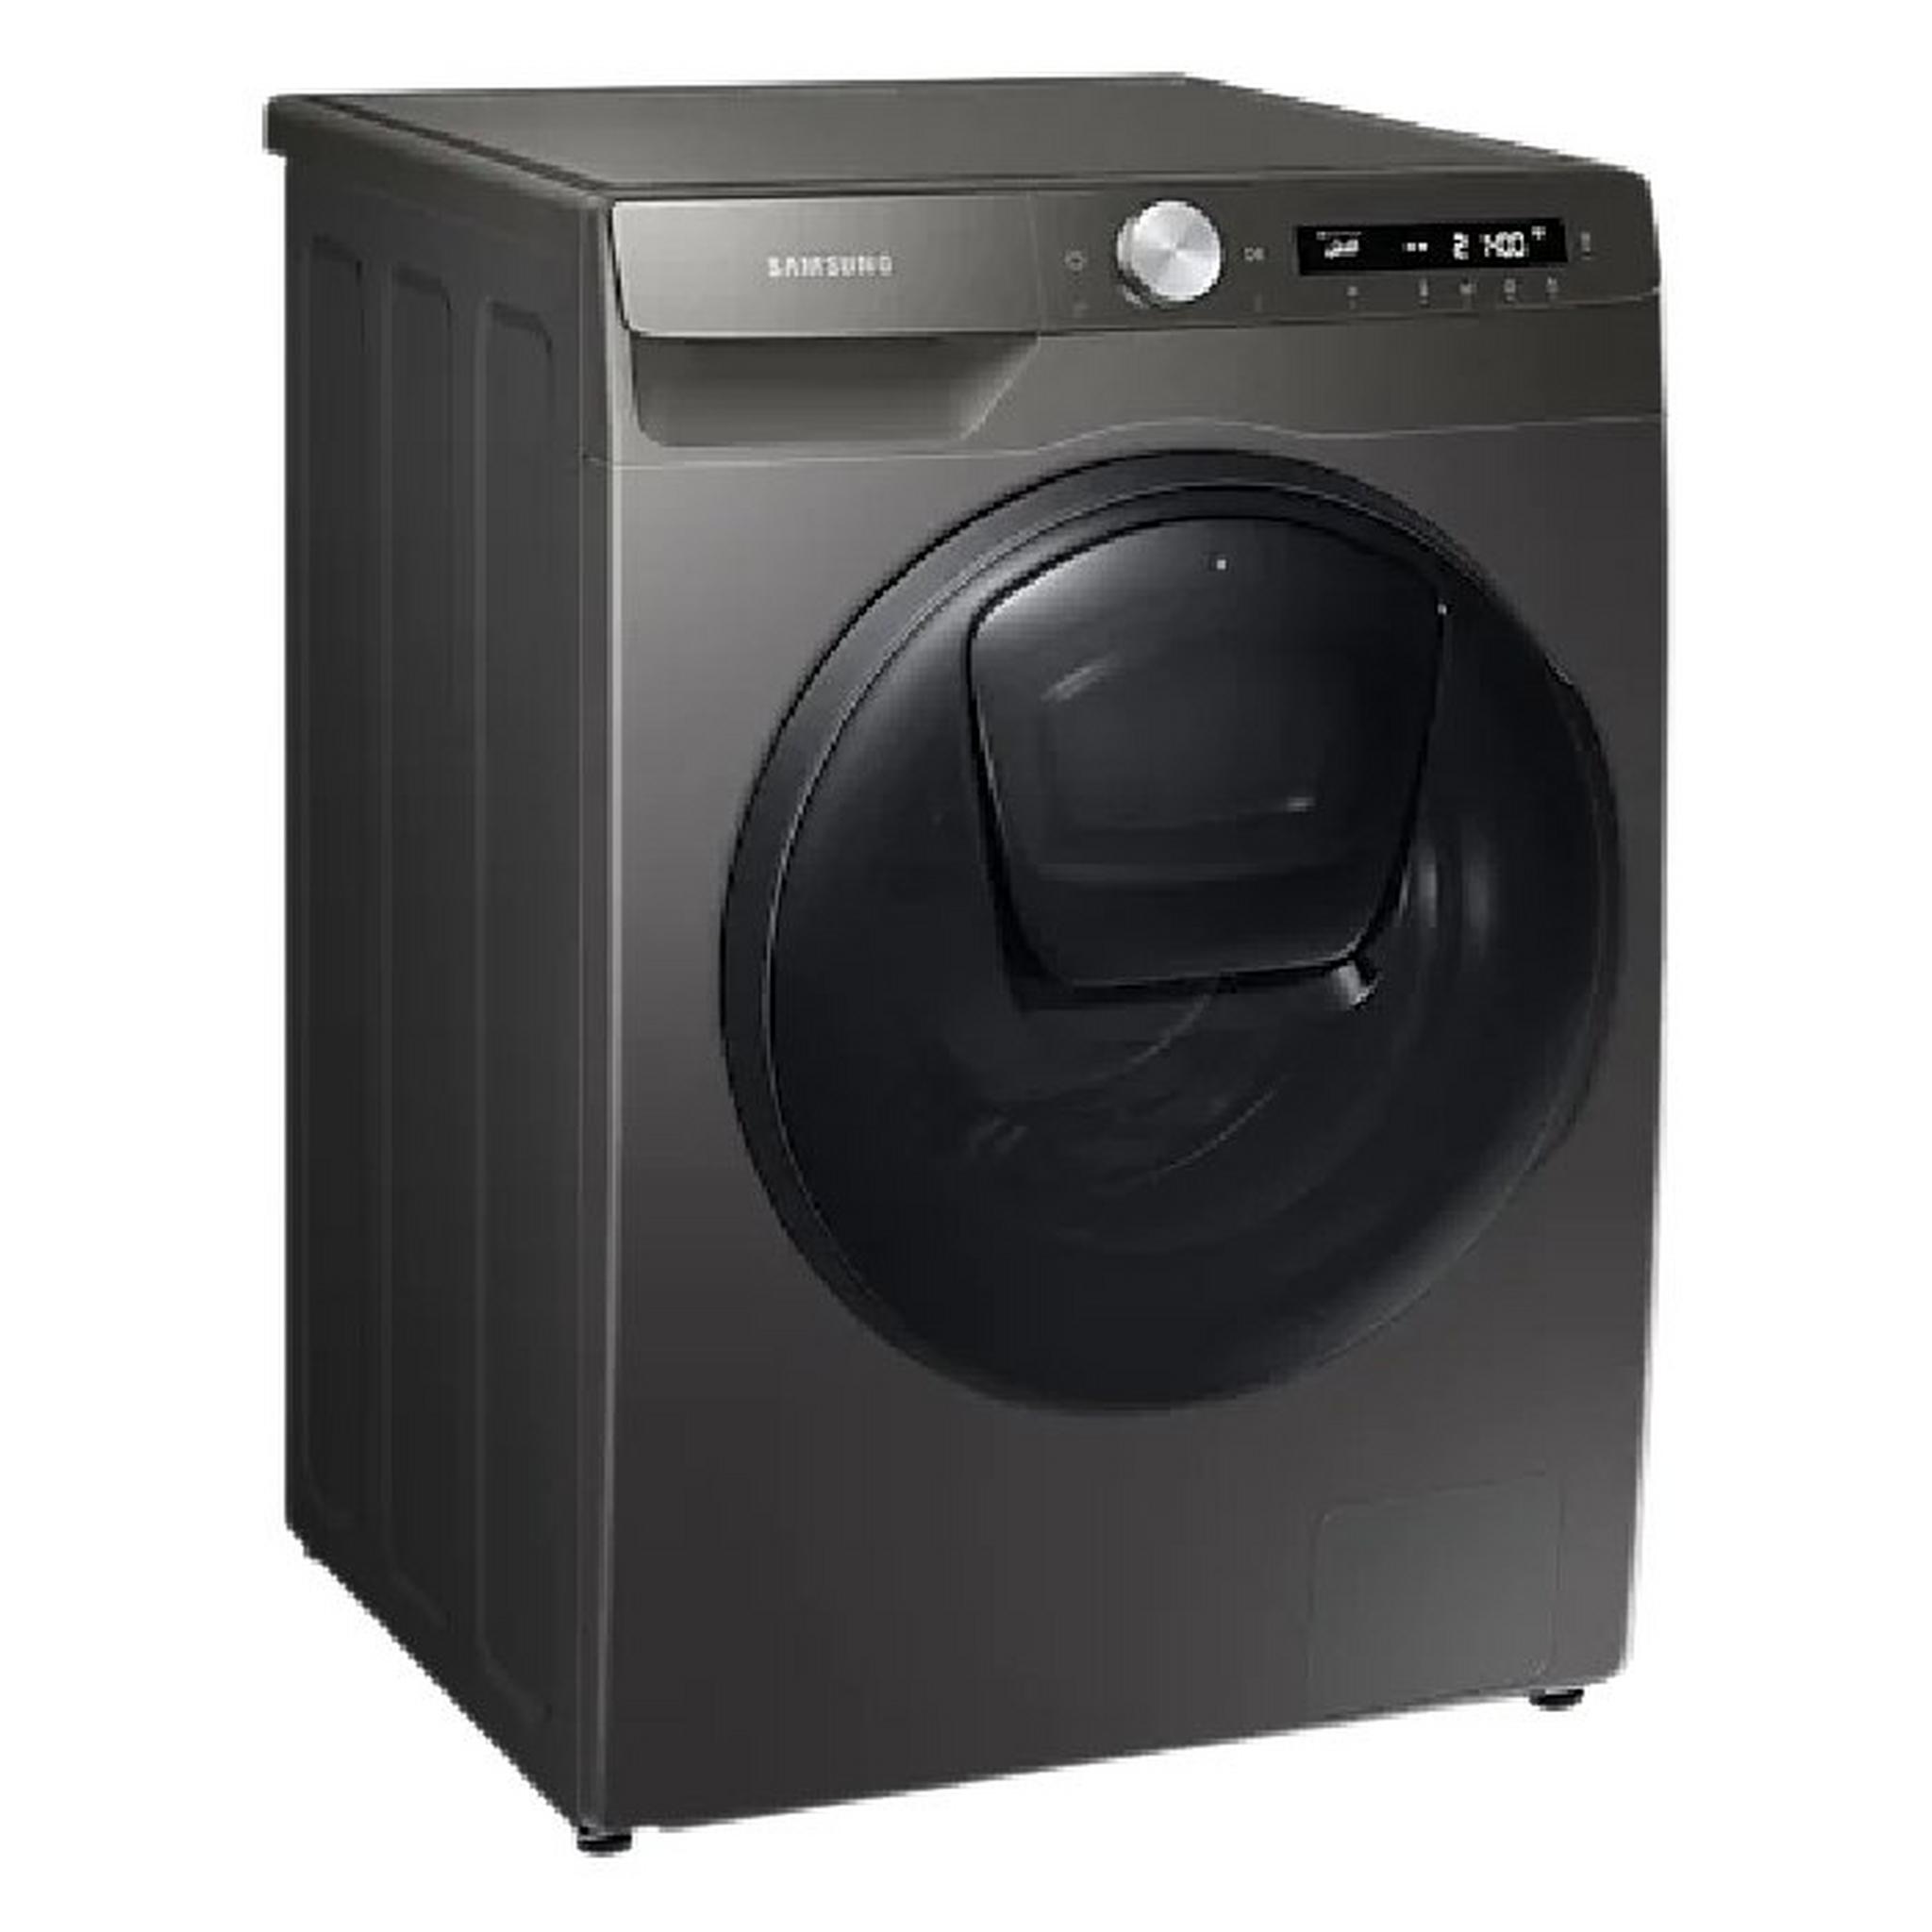 Samsung 10/7 KG AI Controlled Washer/Dryer (WD10T554DBN)